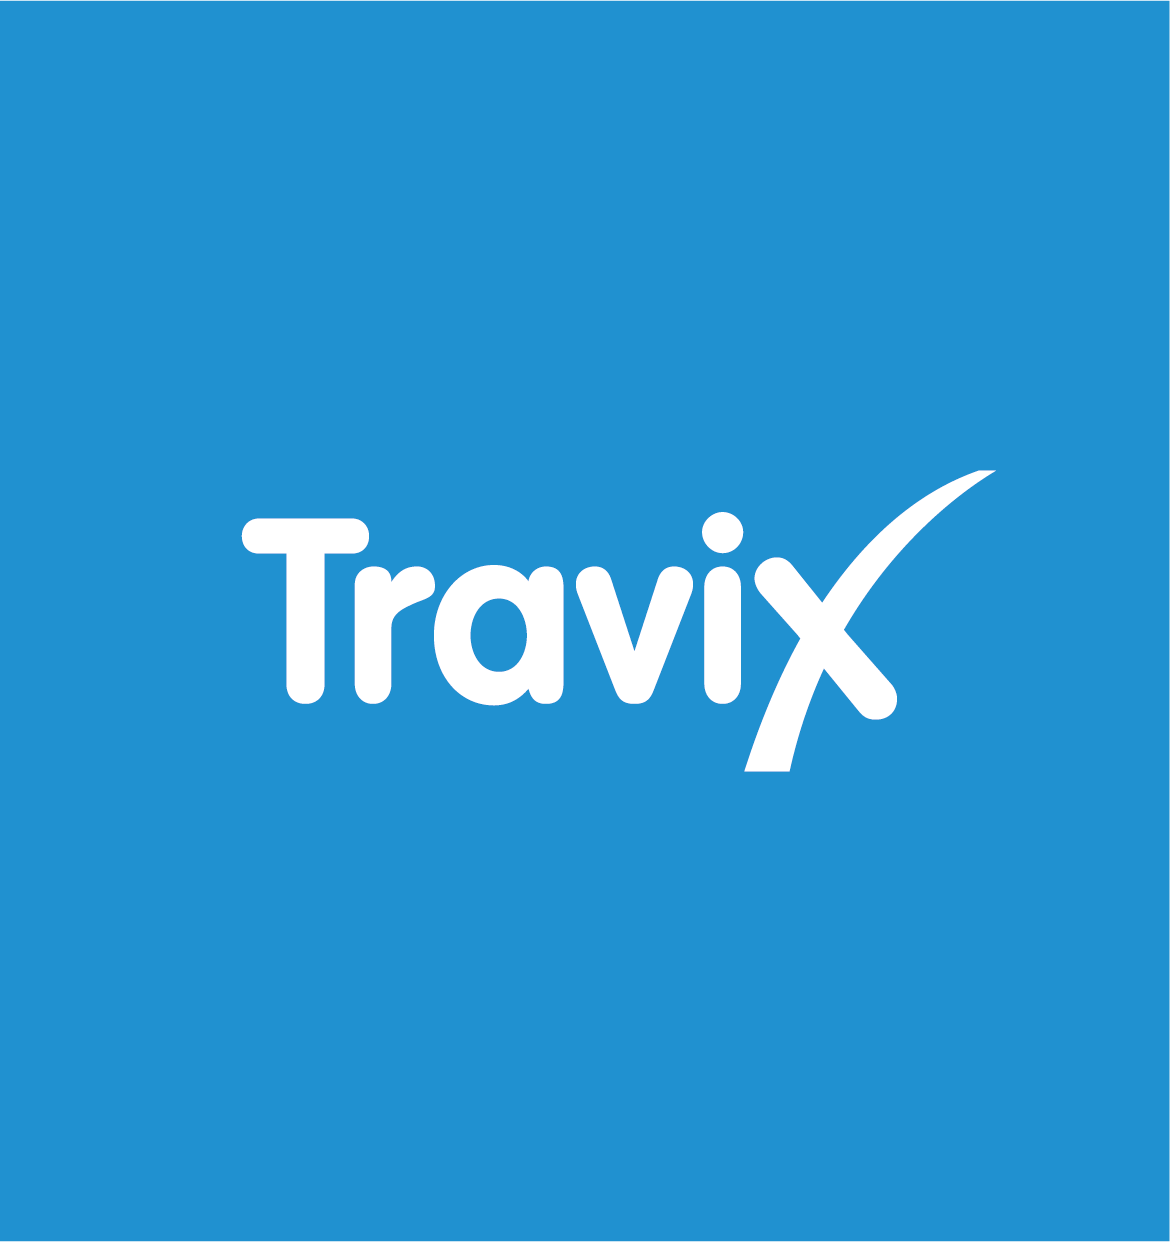 Vayama Logo - travix - Travix